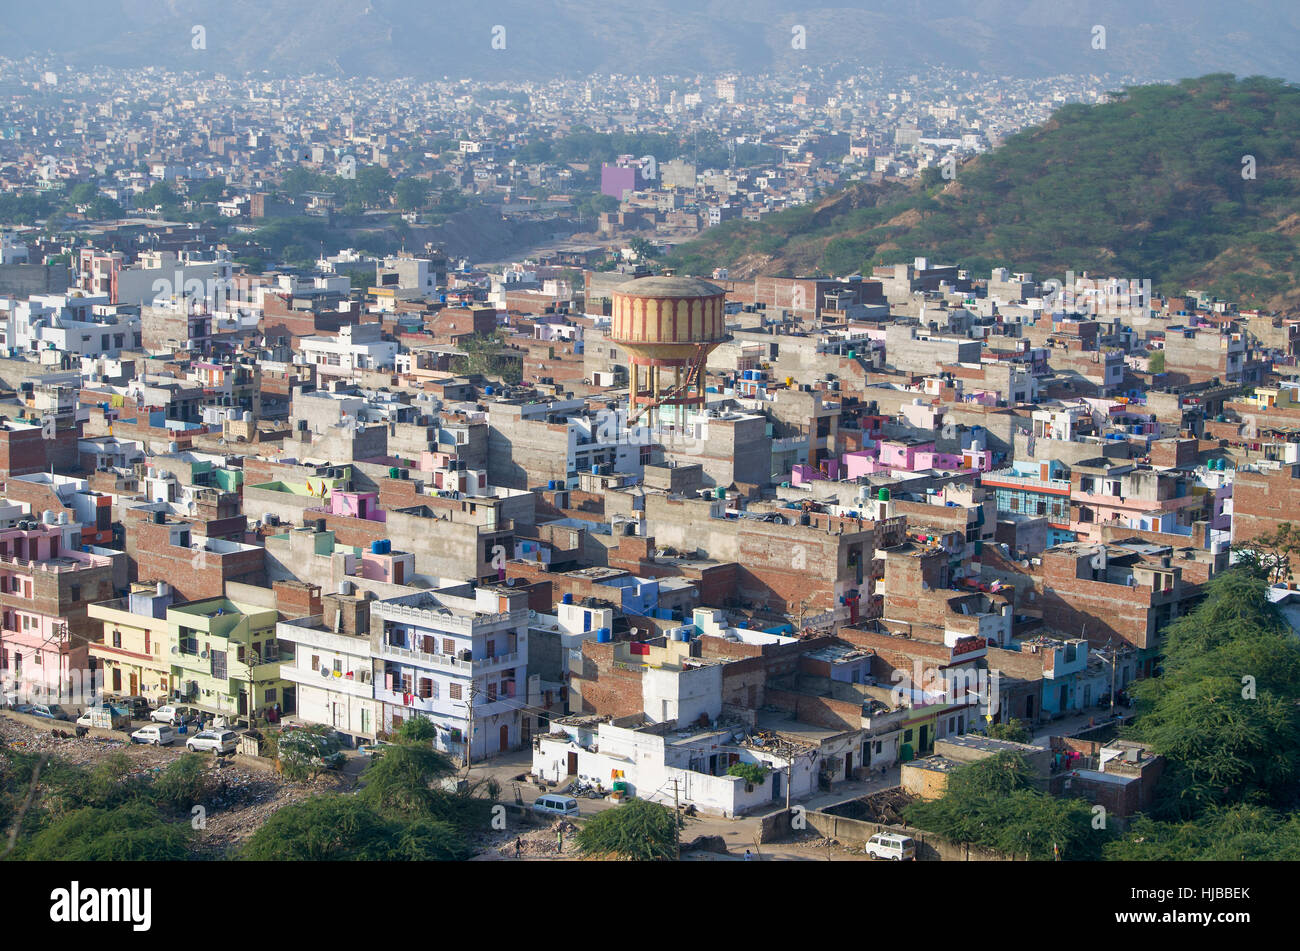 Città di Jaipur vista dall'altezza, città, Jaipur, dal di sopra, case, palazzi, architettura, costruzioni, persone, automobili Foto Stock